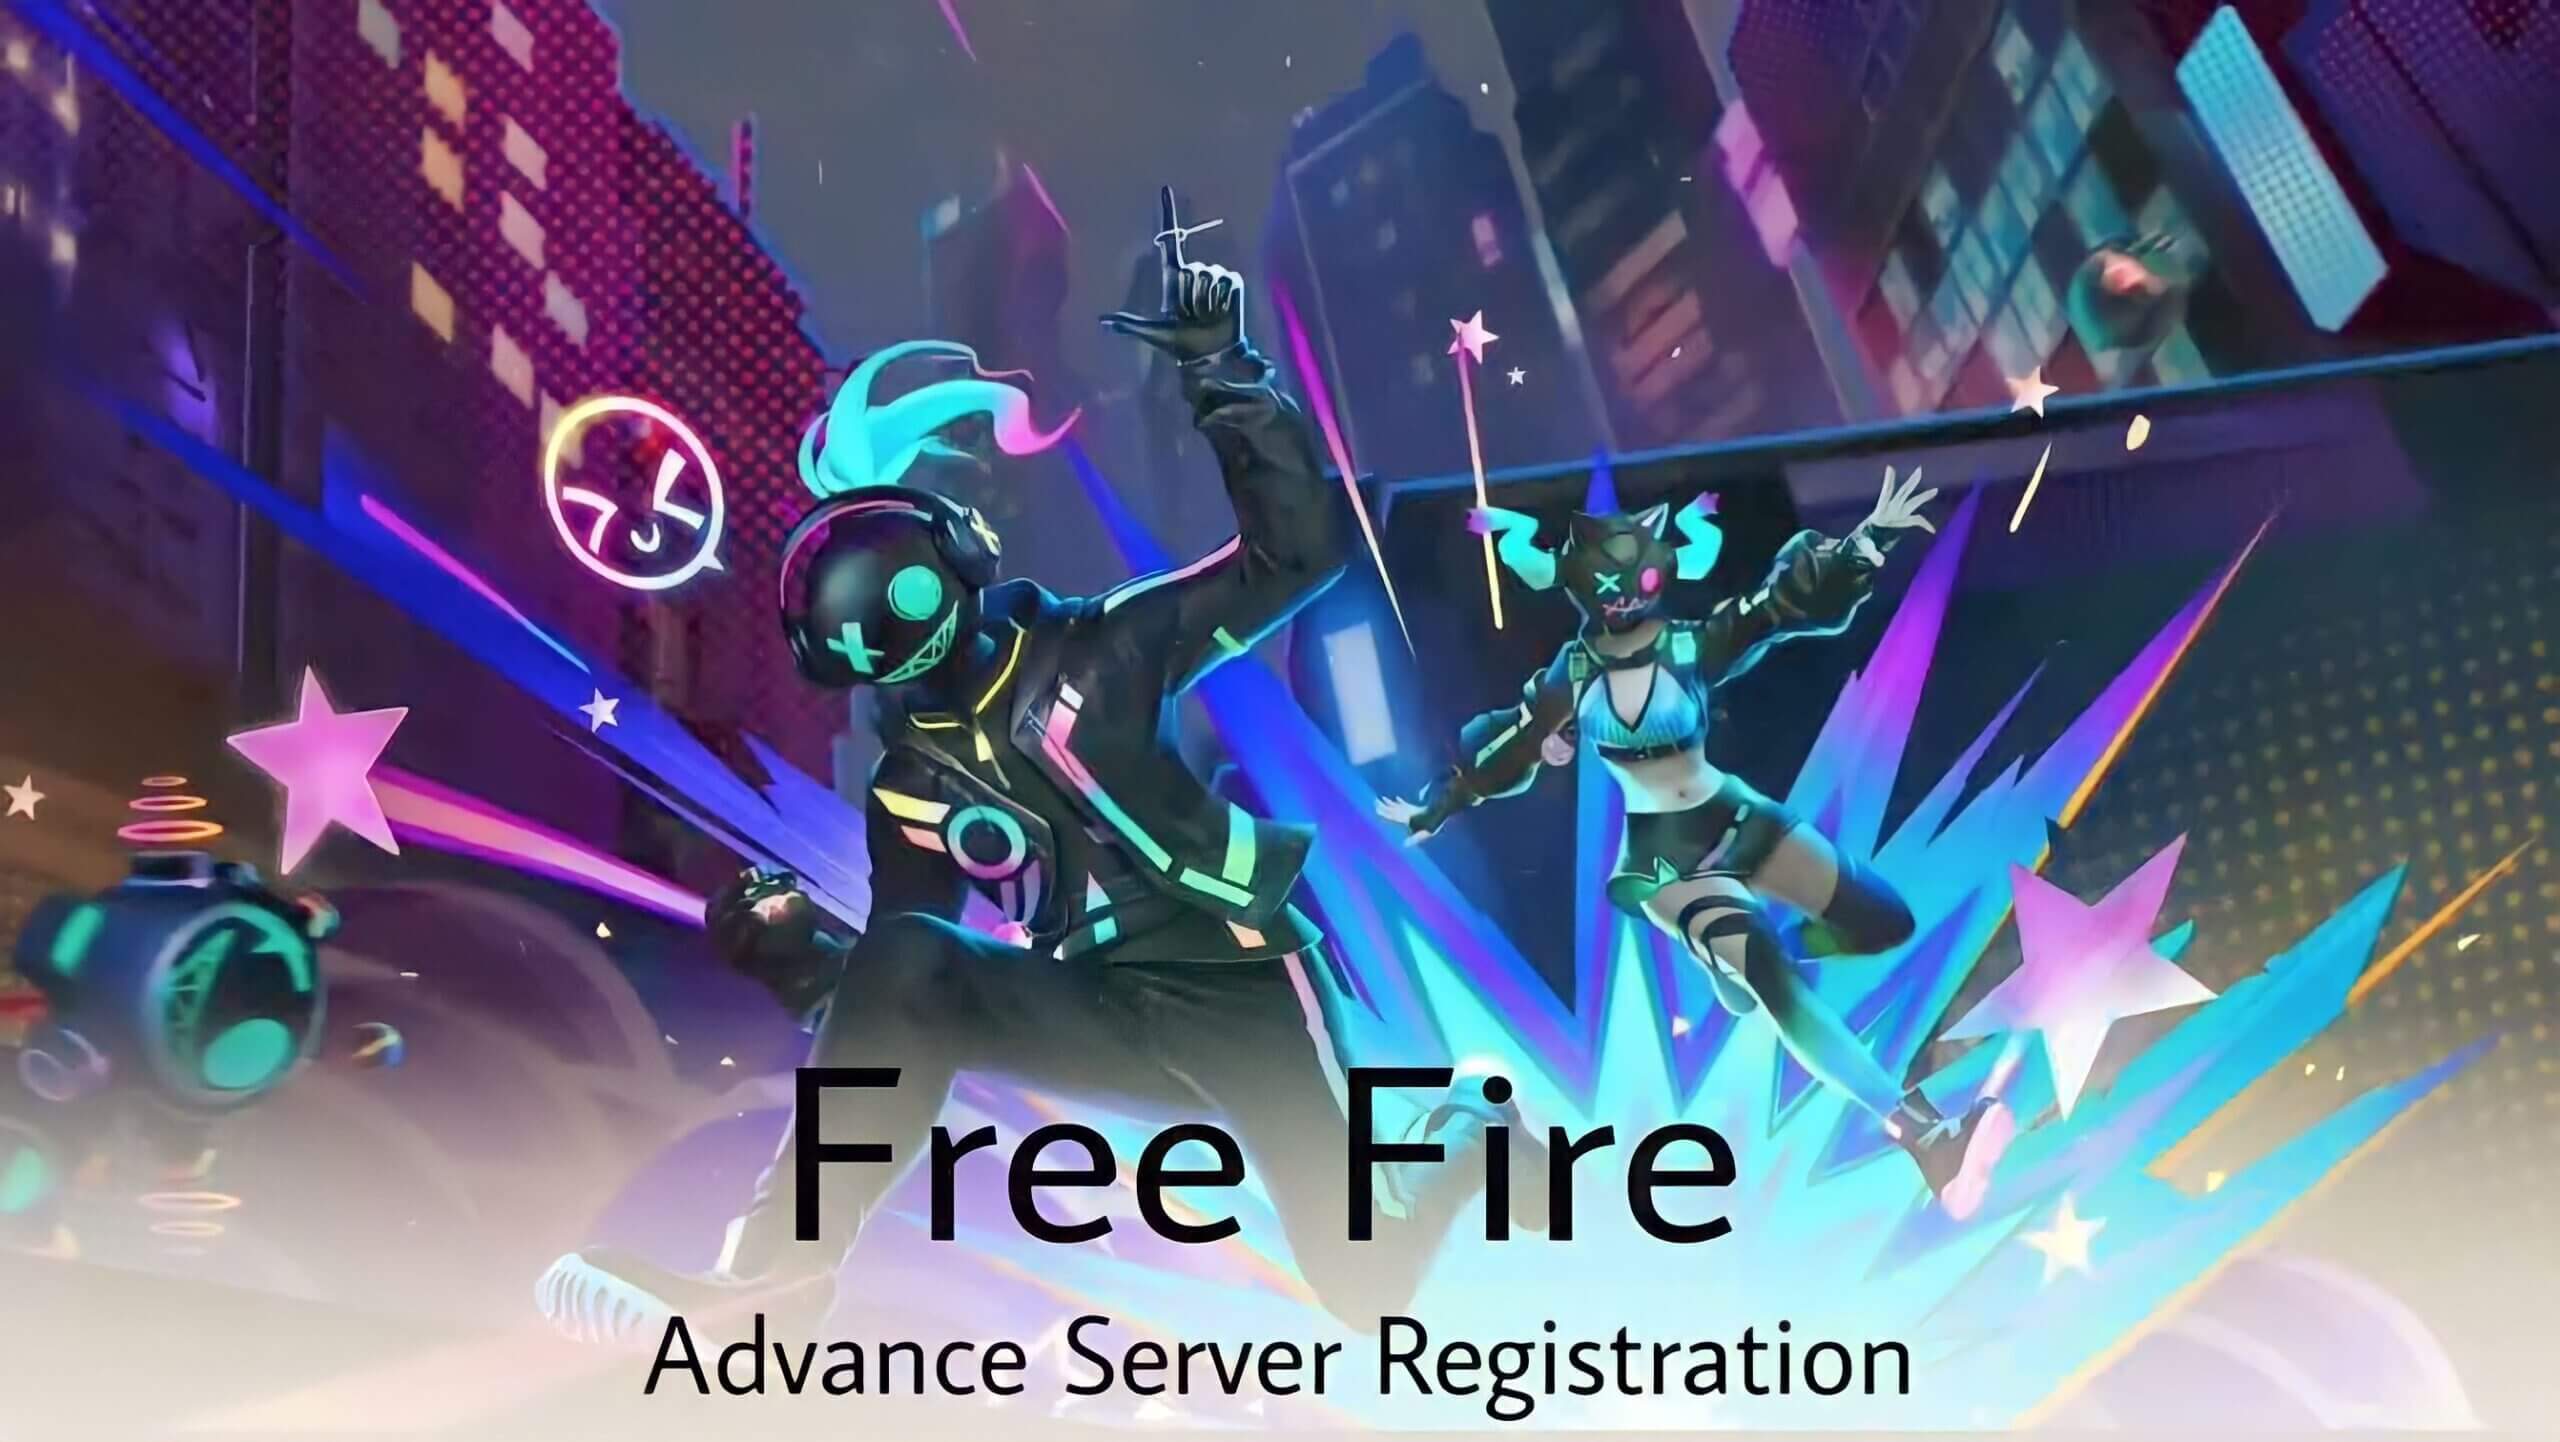 Free Fire Advance Server registration is available now! - Free Fire Advance  Server - TapTap